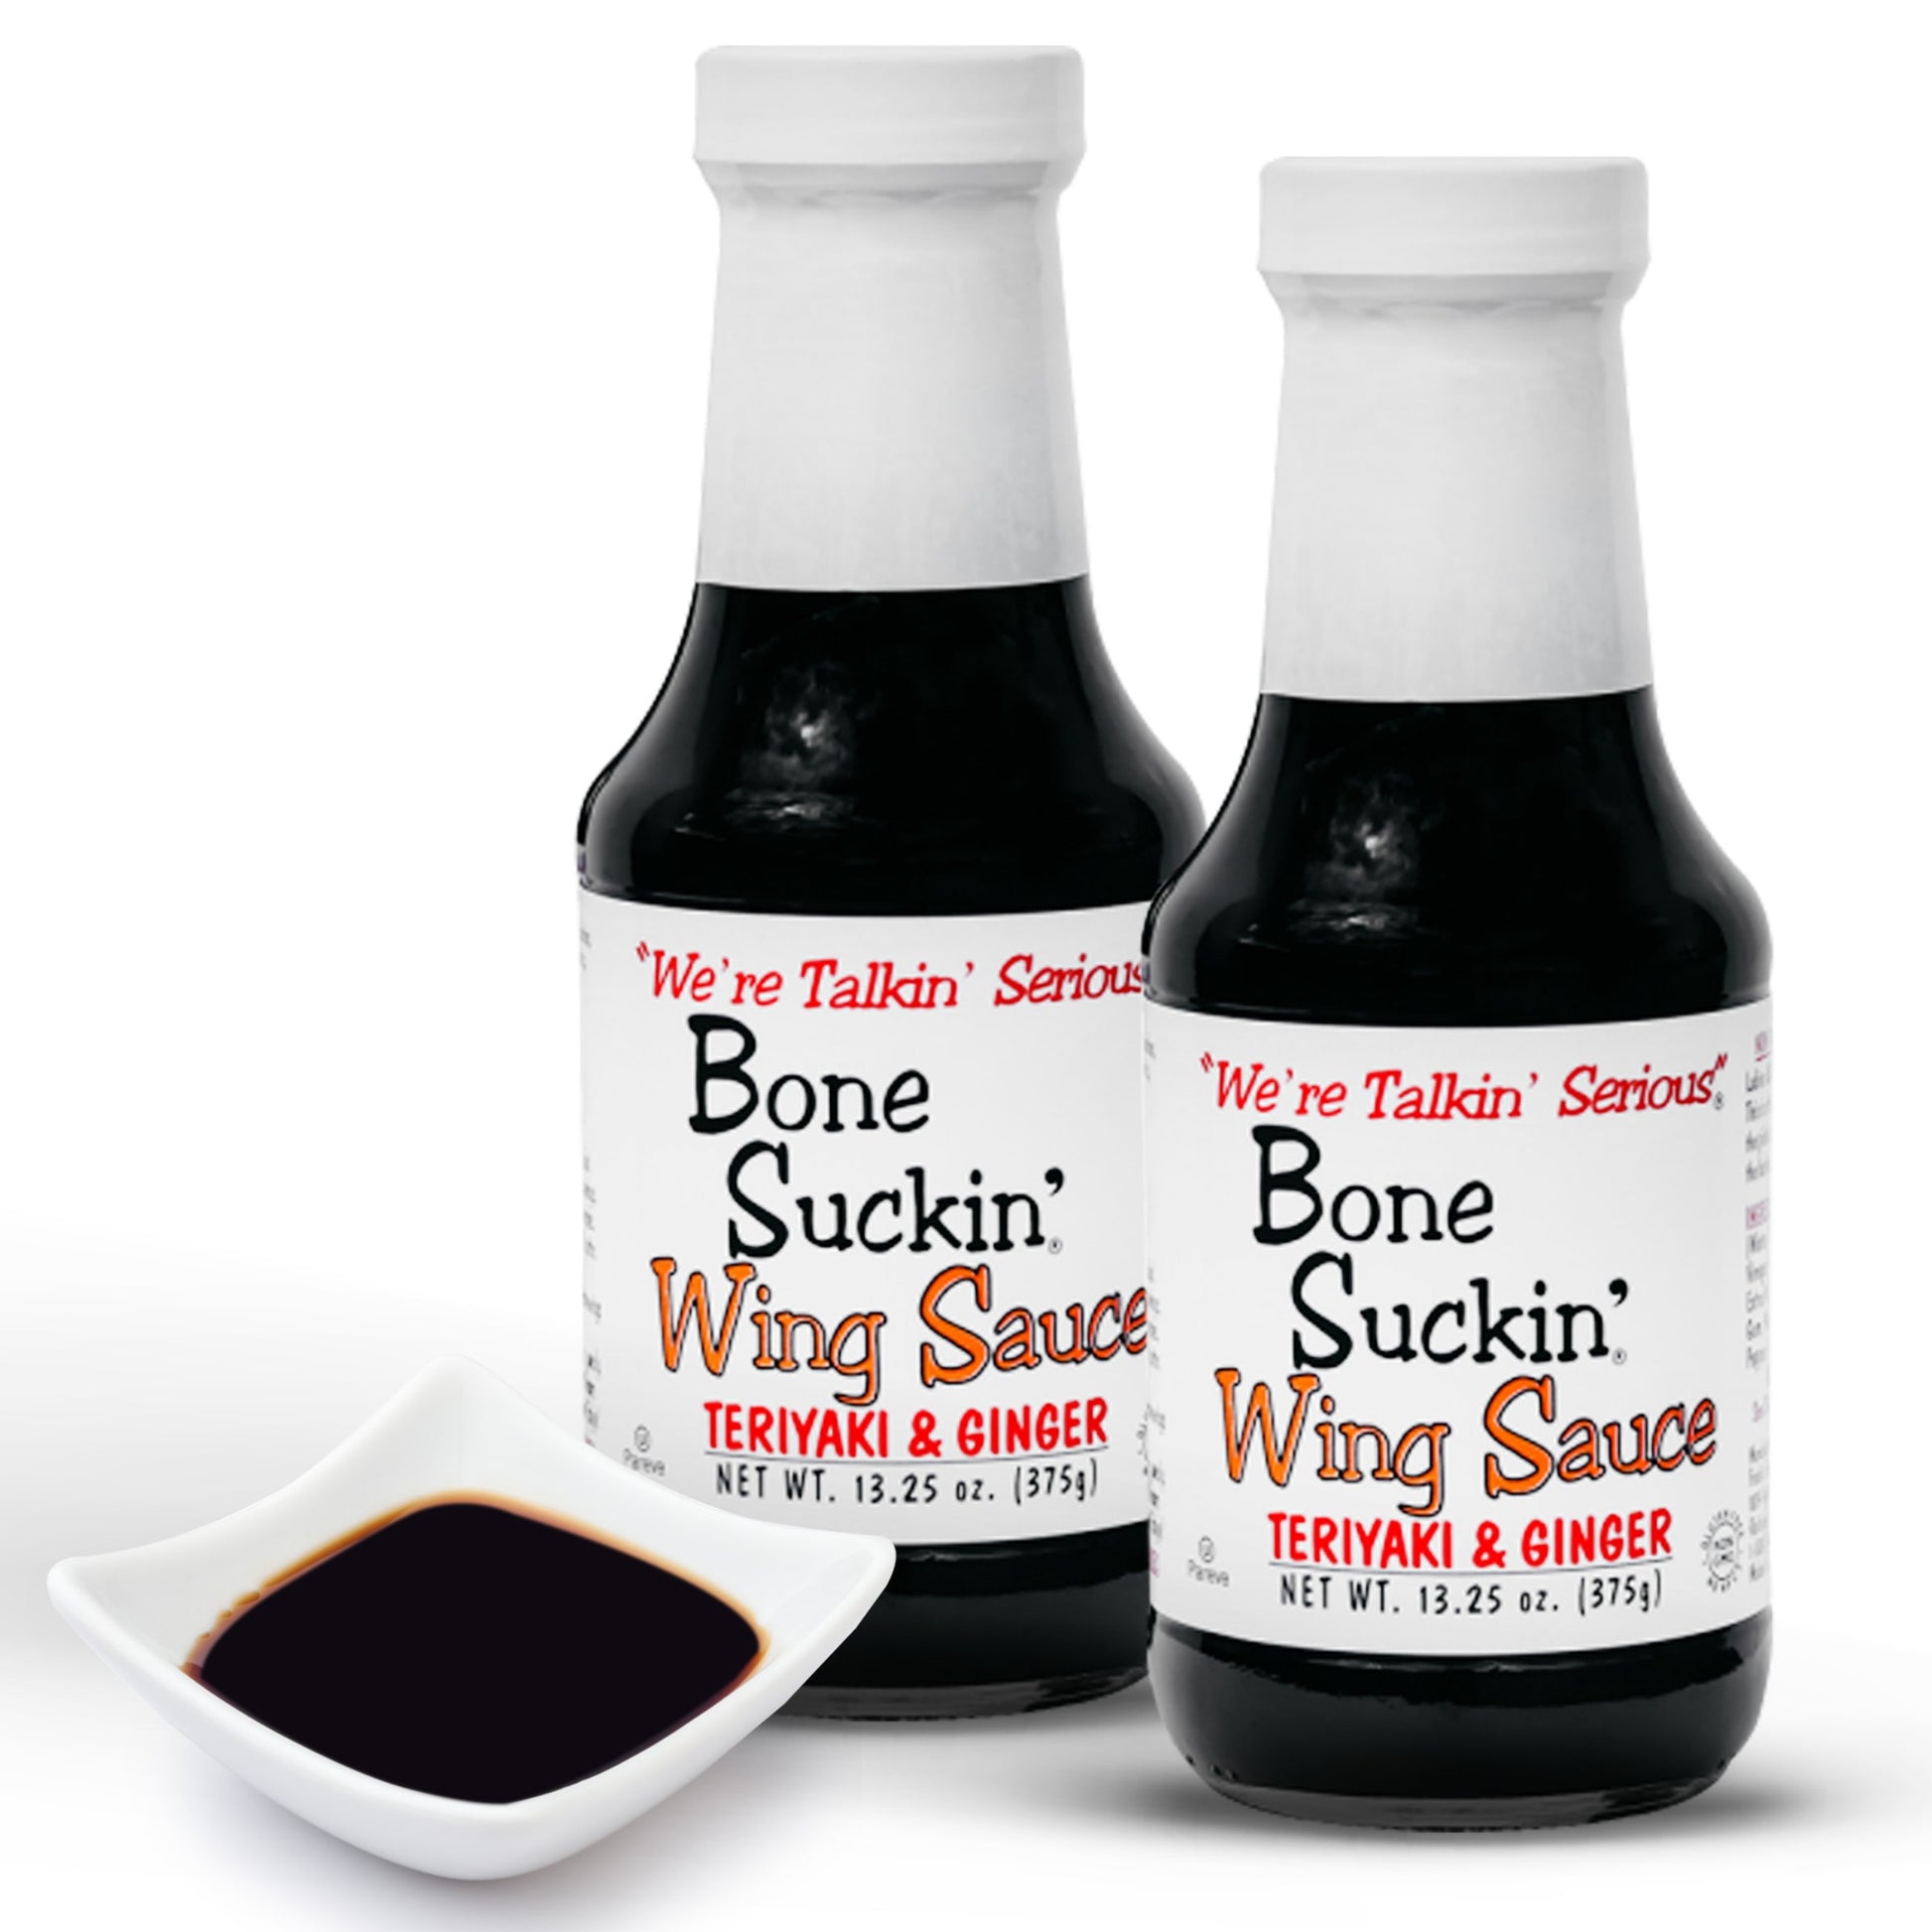 Bone Suckin'® Wing Sauce, Teriyaki & Ginger, 13.25 oz., 2 pack